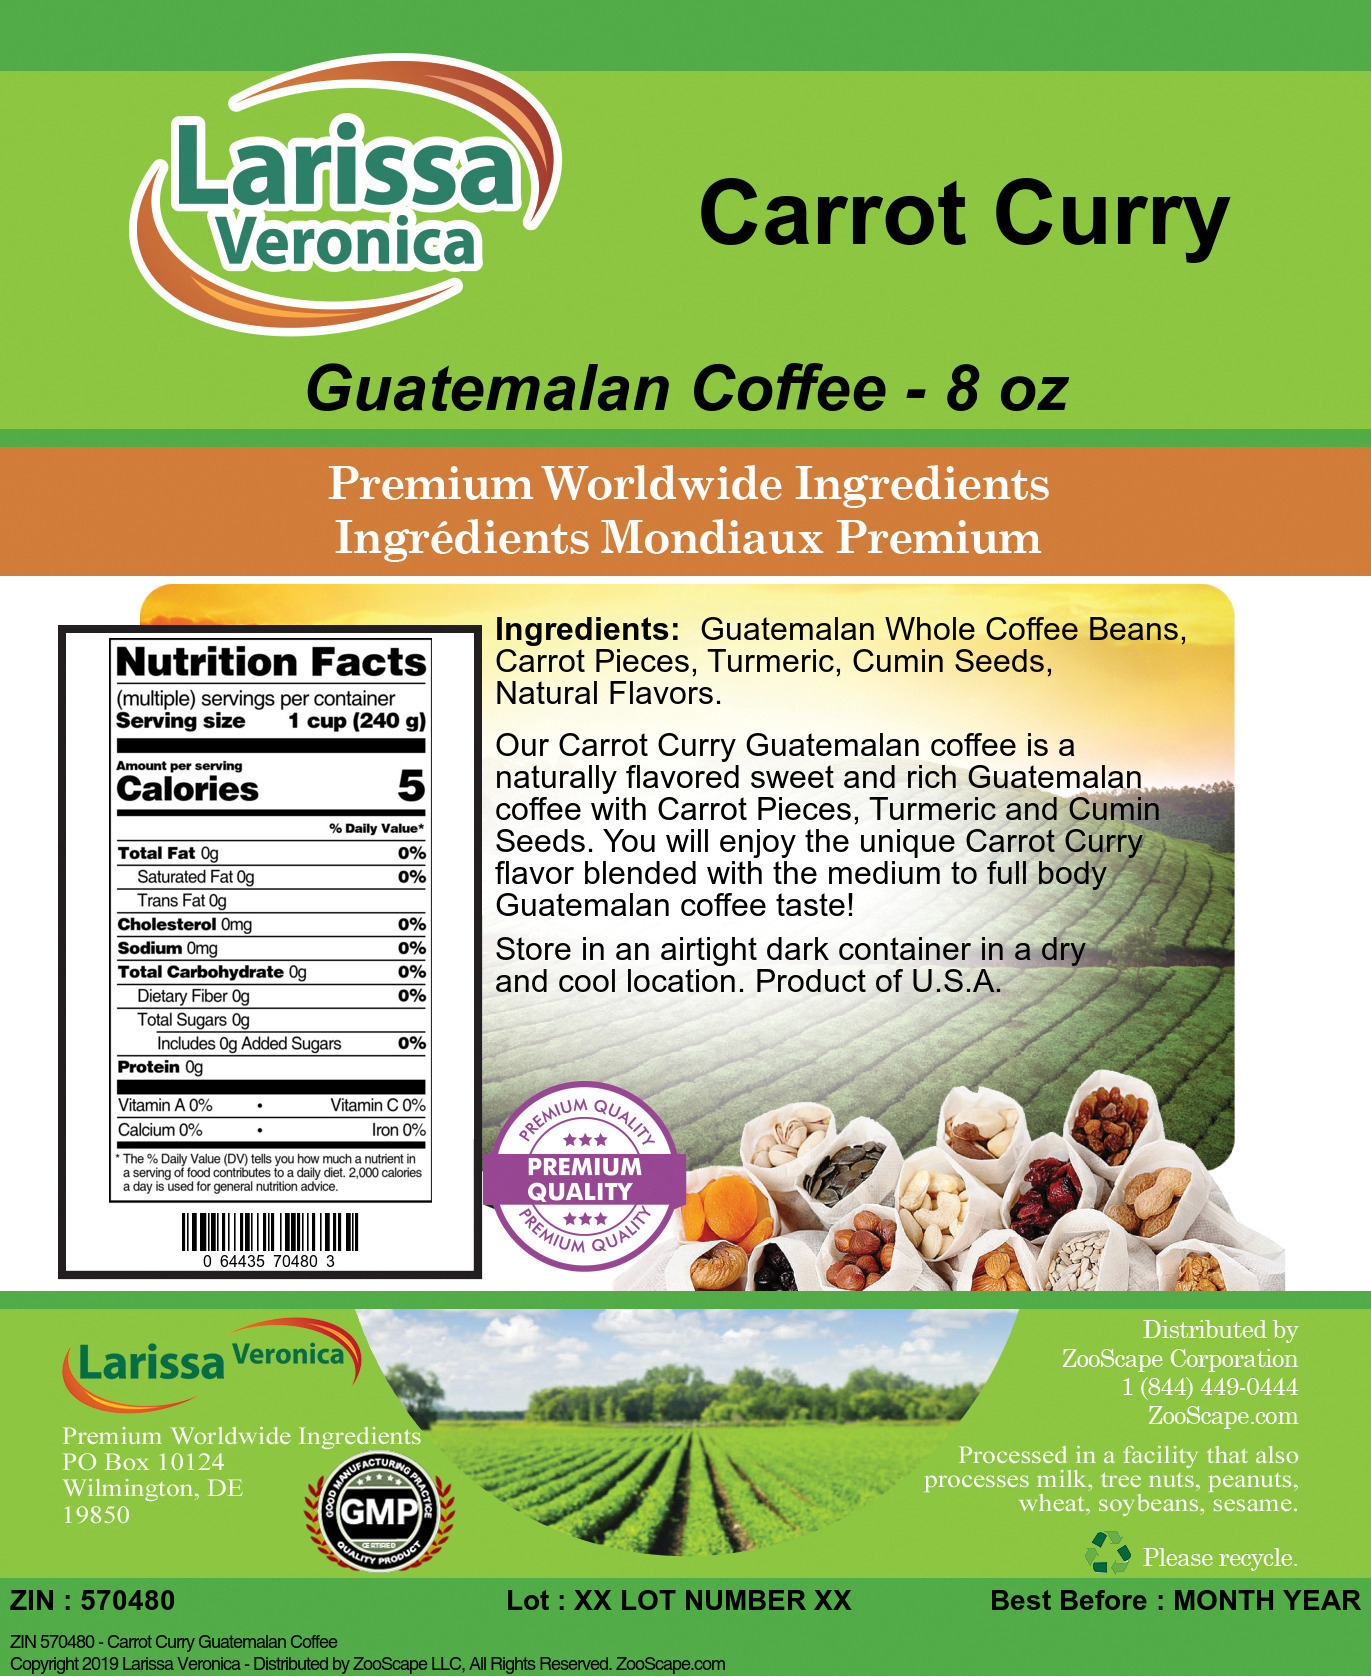 Carrot Curry Guatemalan Coffee - Label